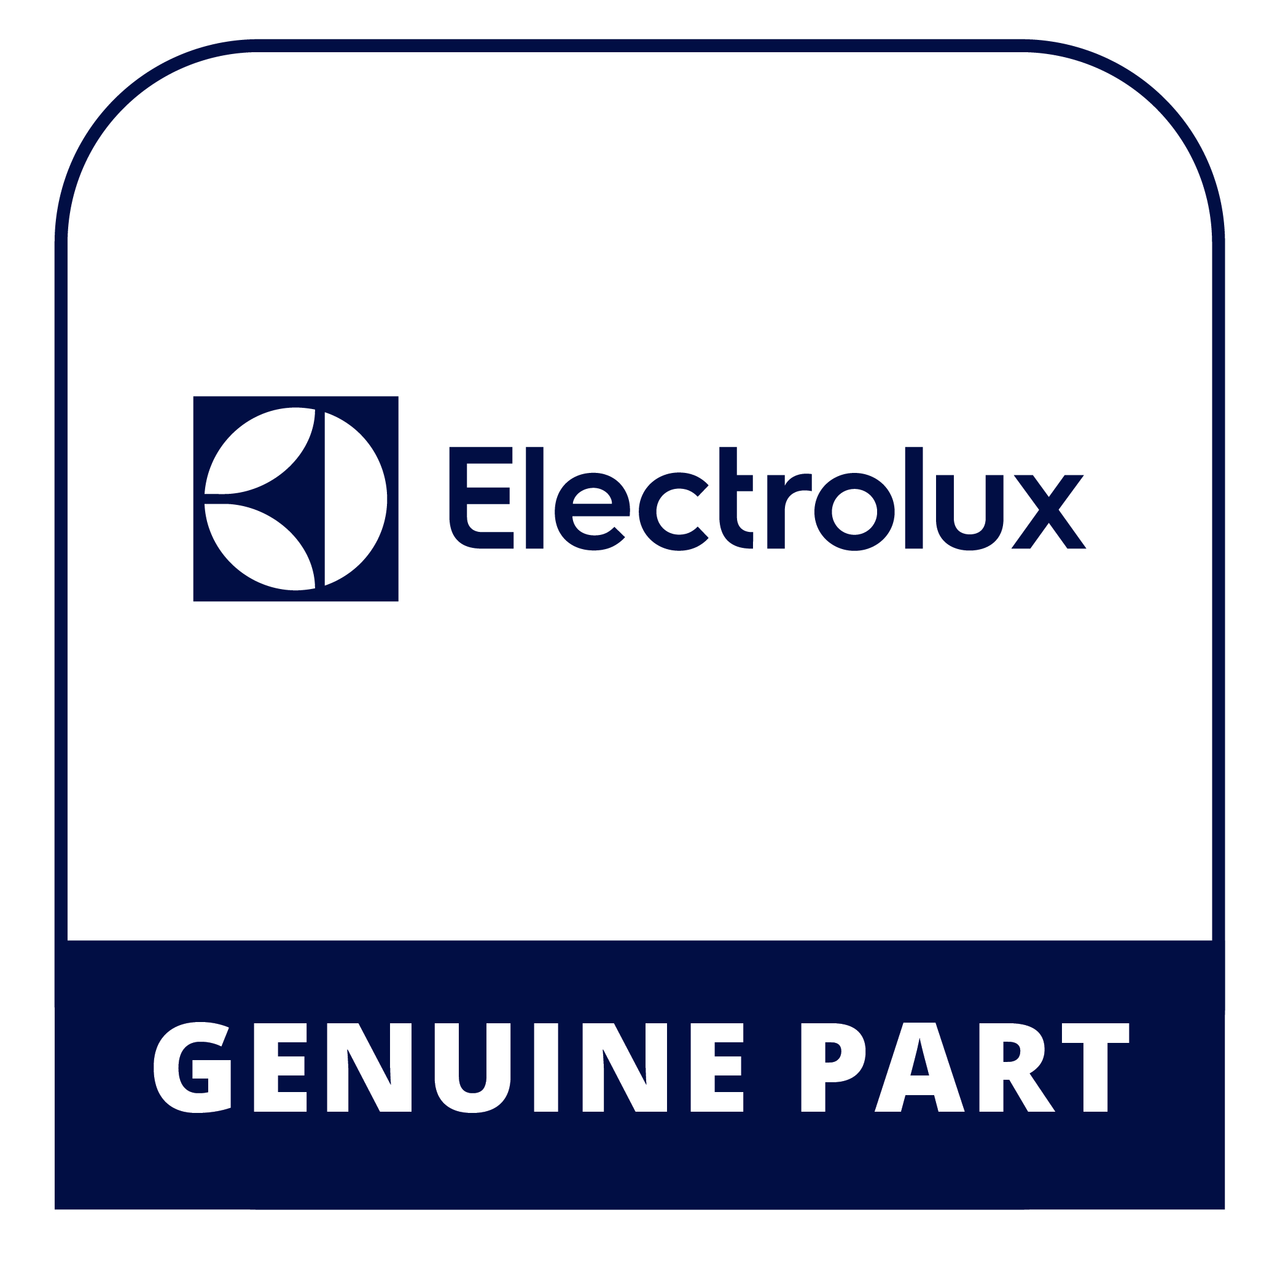 Frigidaire - Electrolux 137116000 - Motor - Genuine Electrolux Part